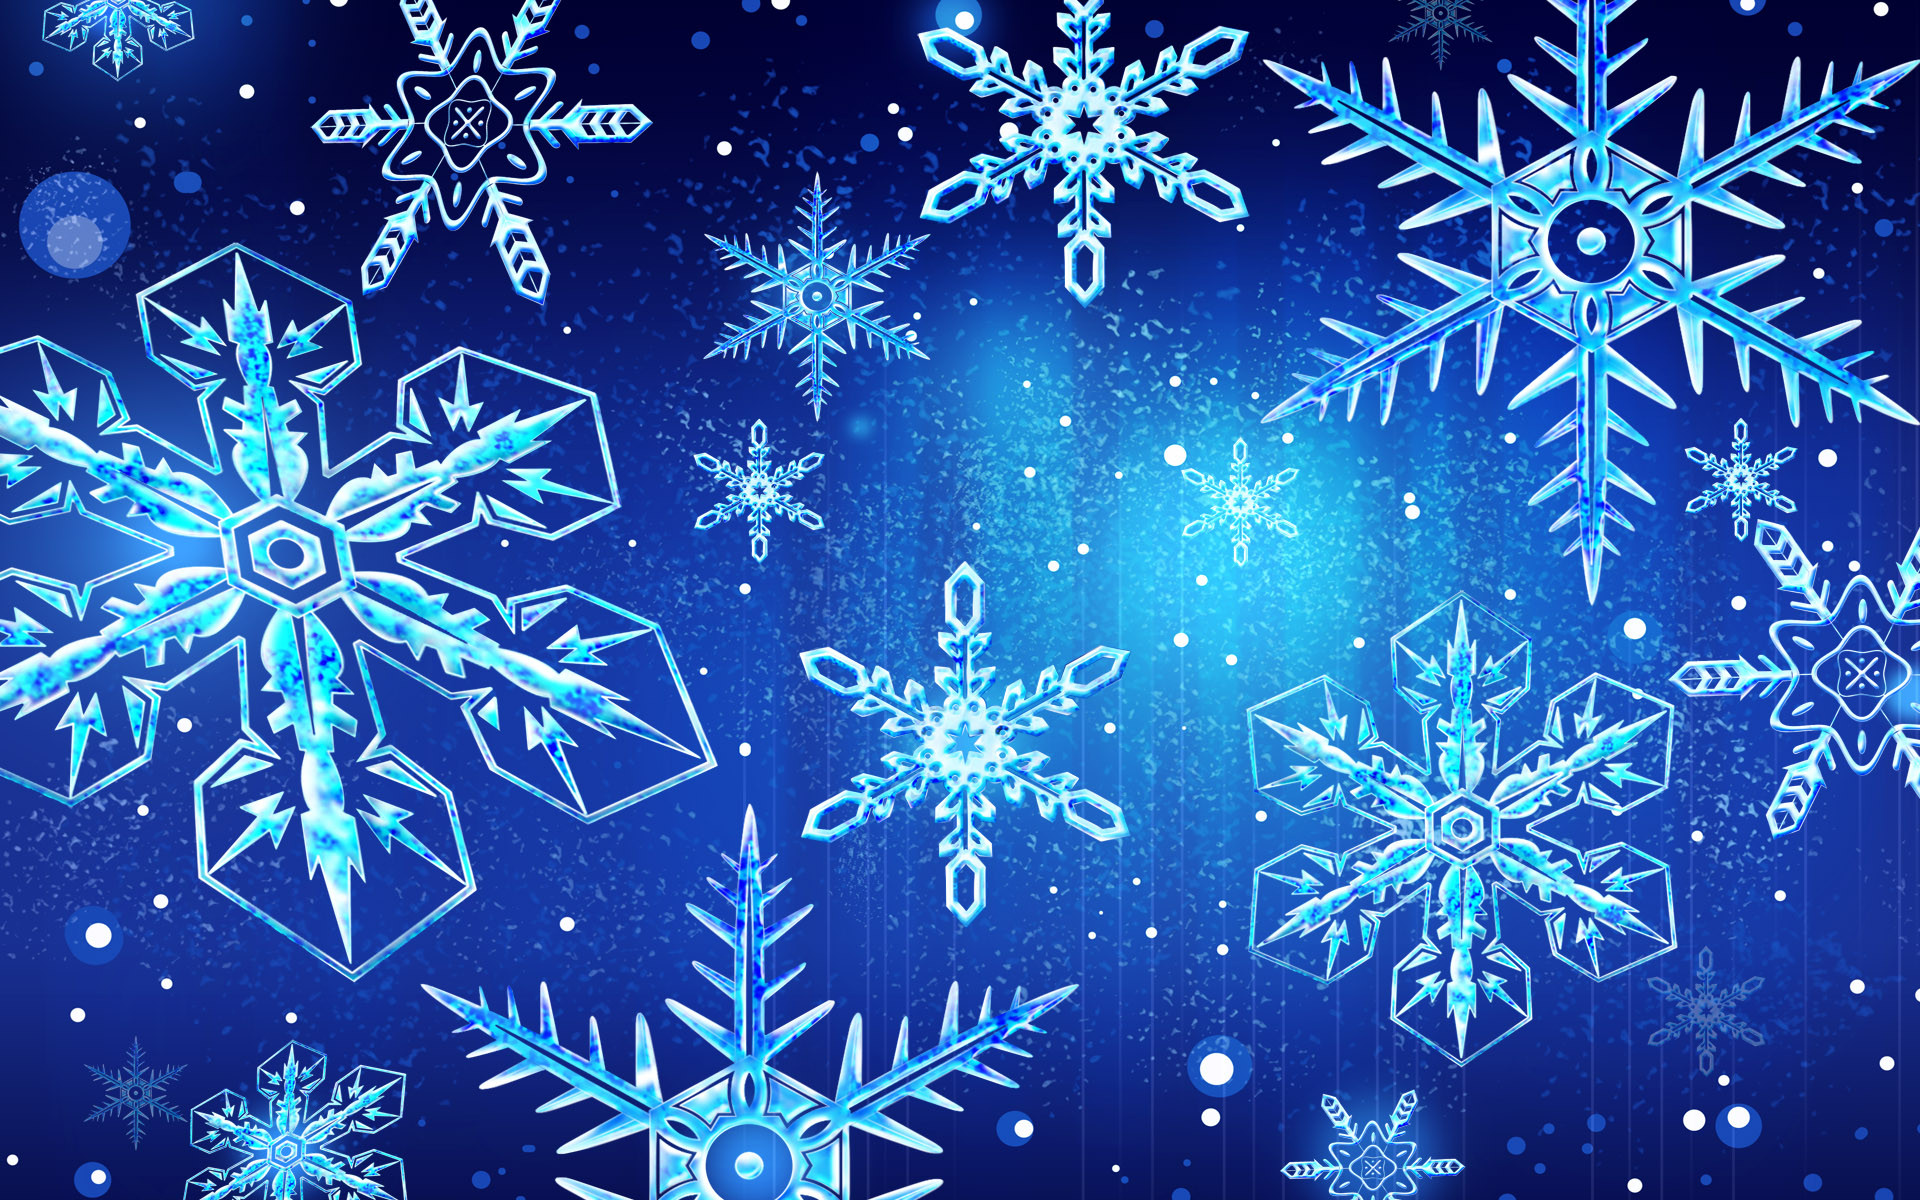 Snowflake Frozen 2d Wallpaper Wallpaperlepi